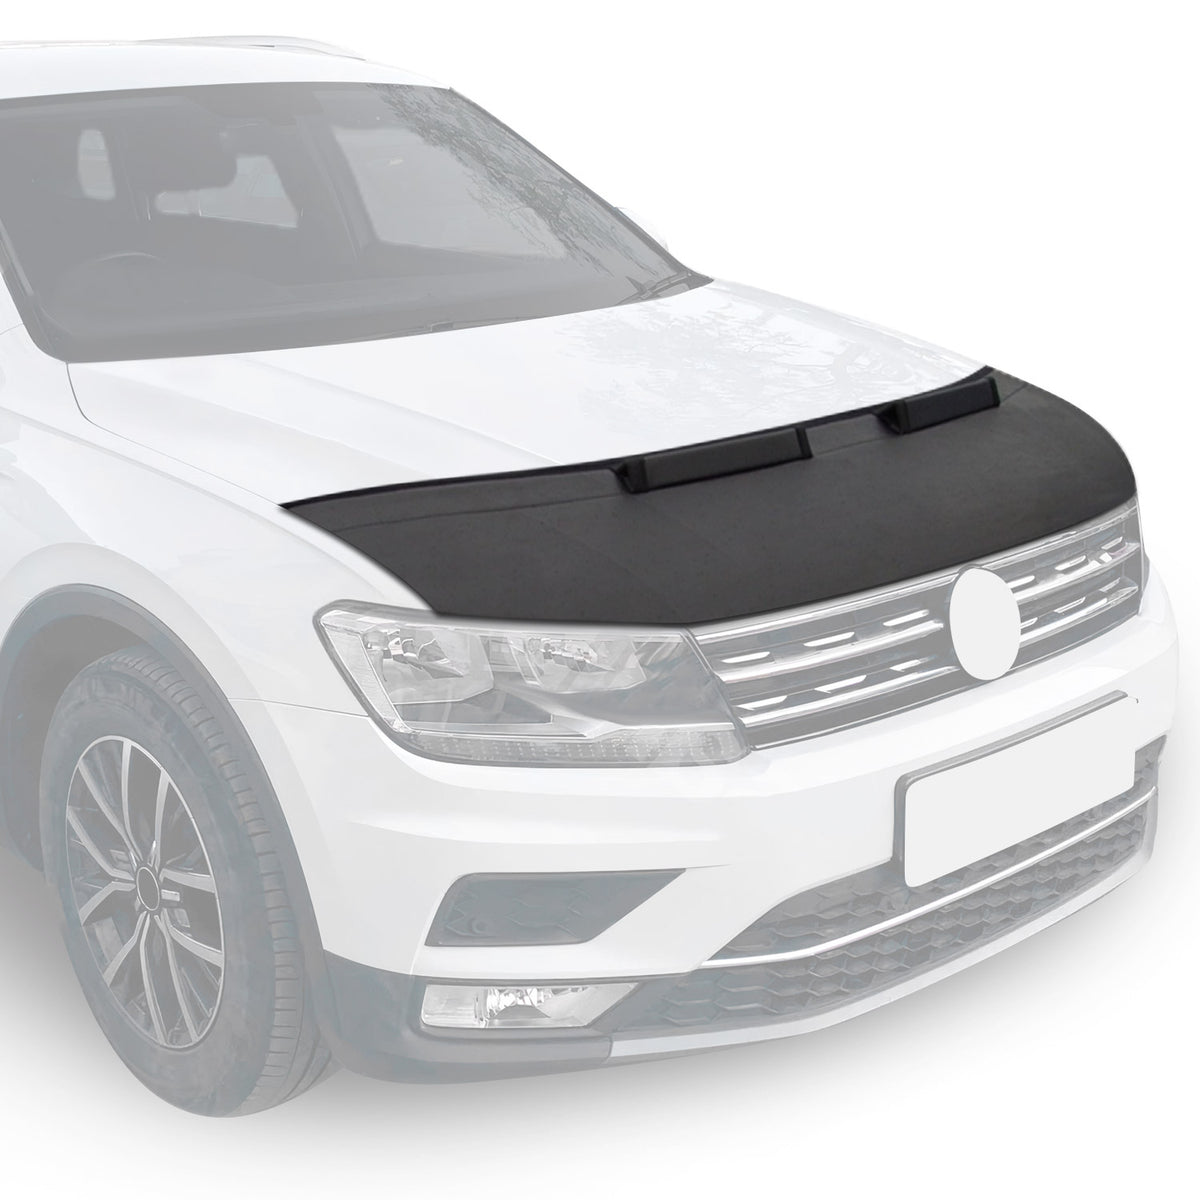 Hood Bra Stone Chip Protection Bonnet Bra for VW Sharan 2010-2015 Black Half